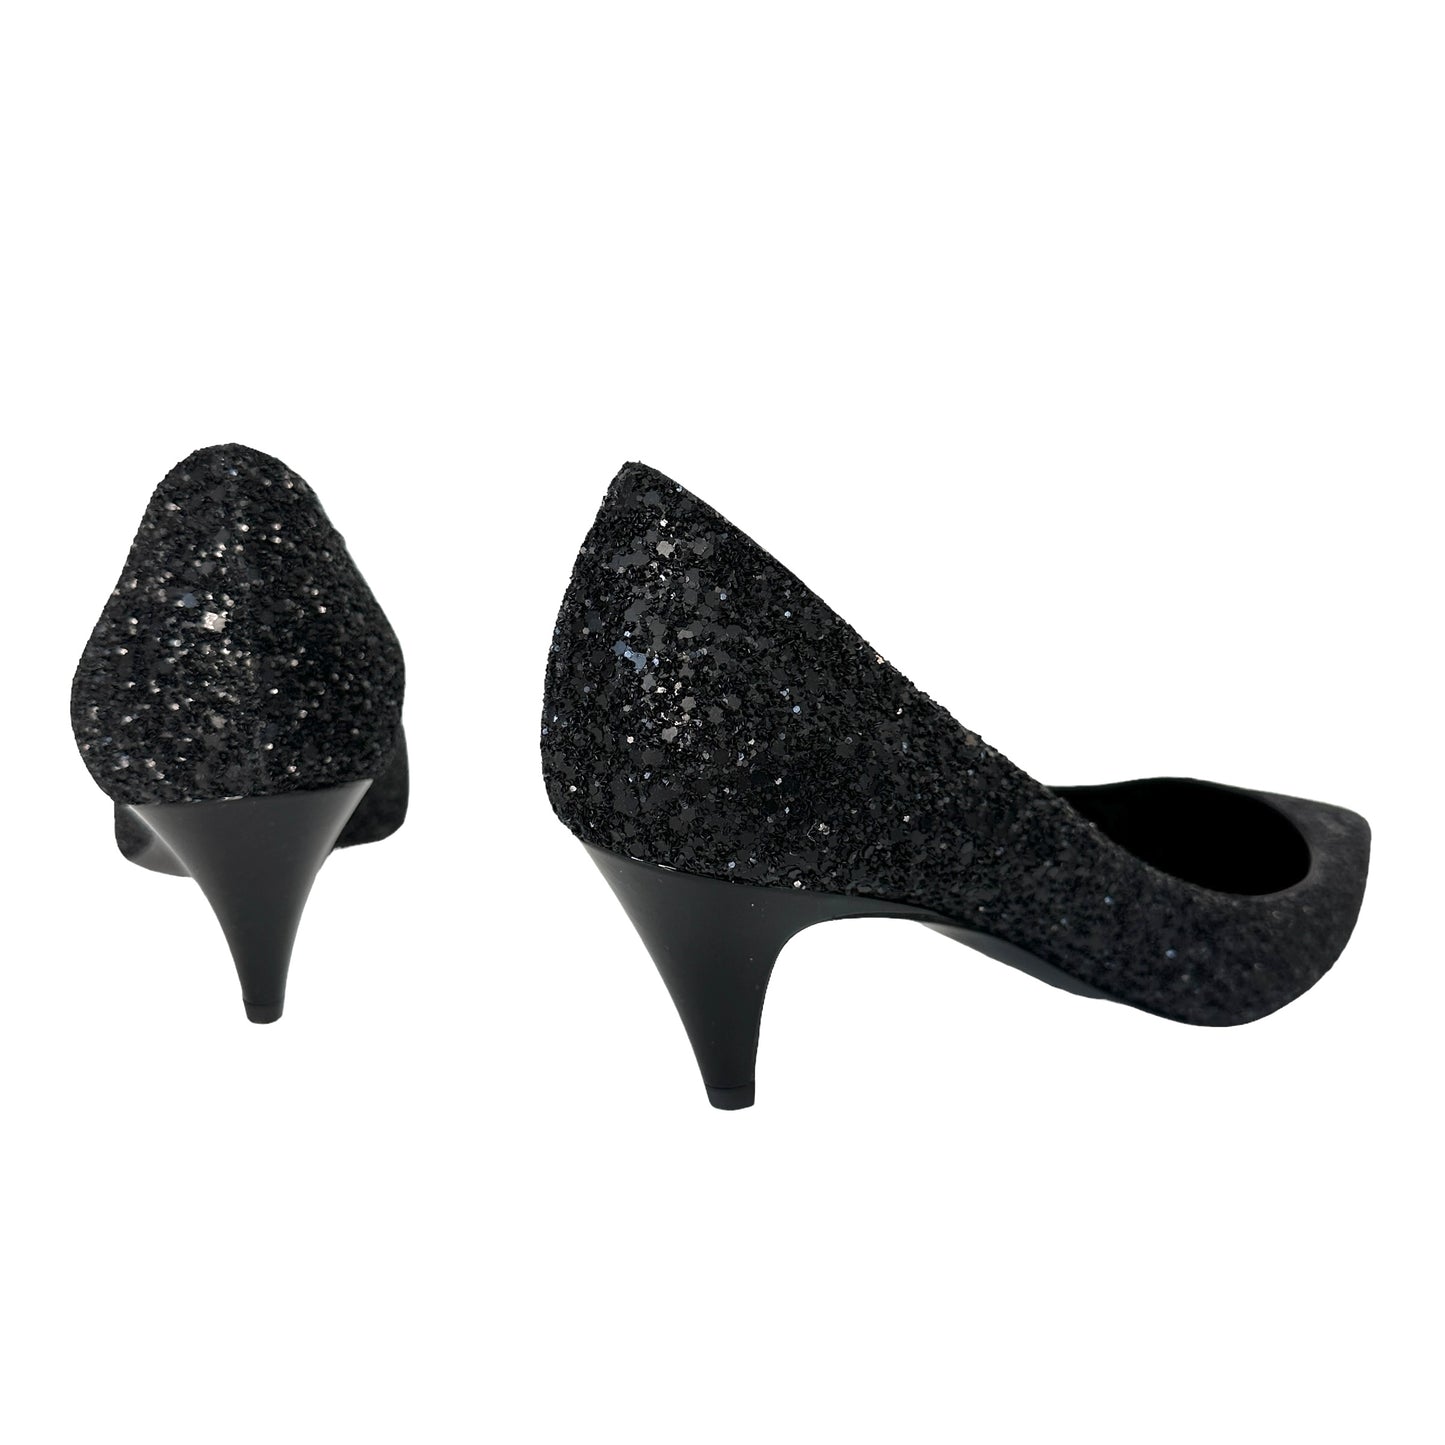 Matte Black Glitter Shoes - 9